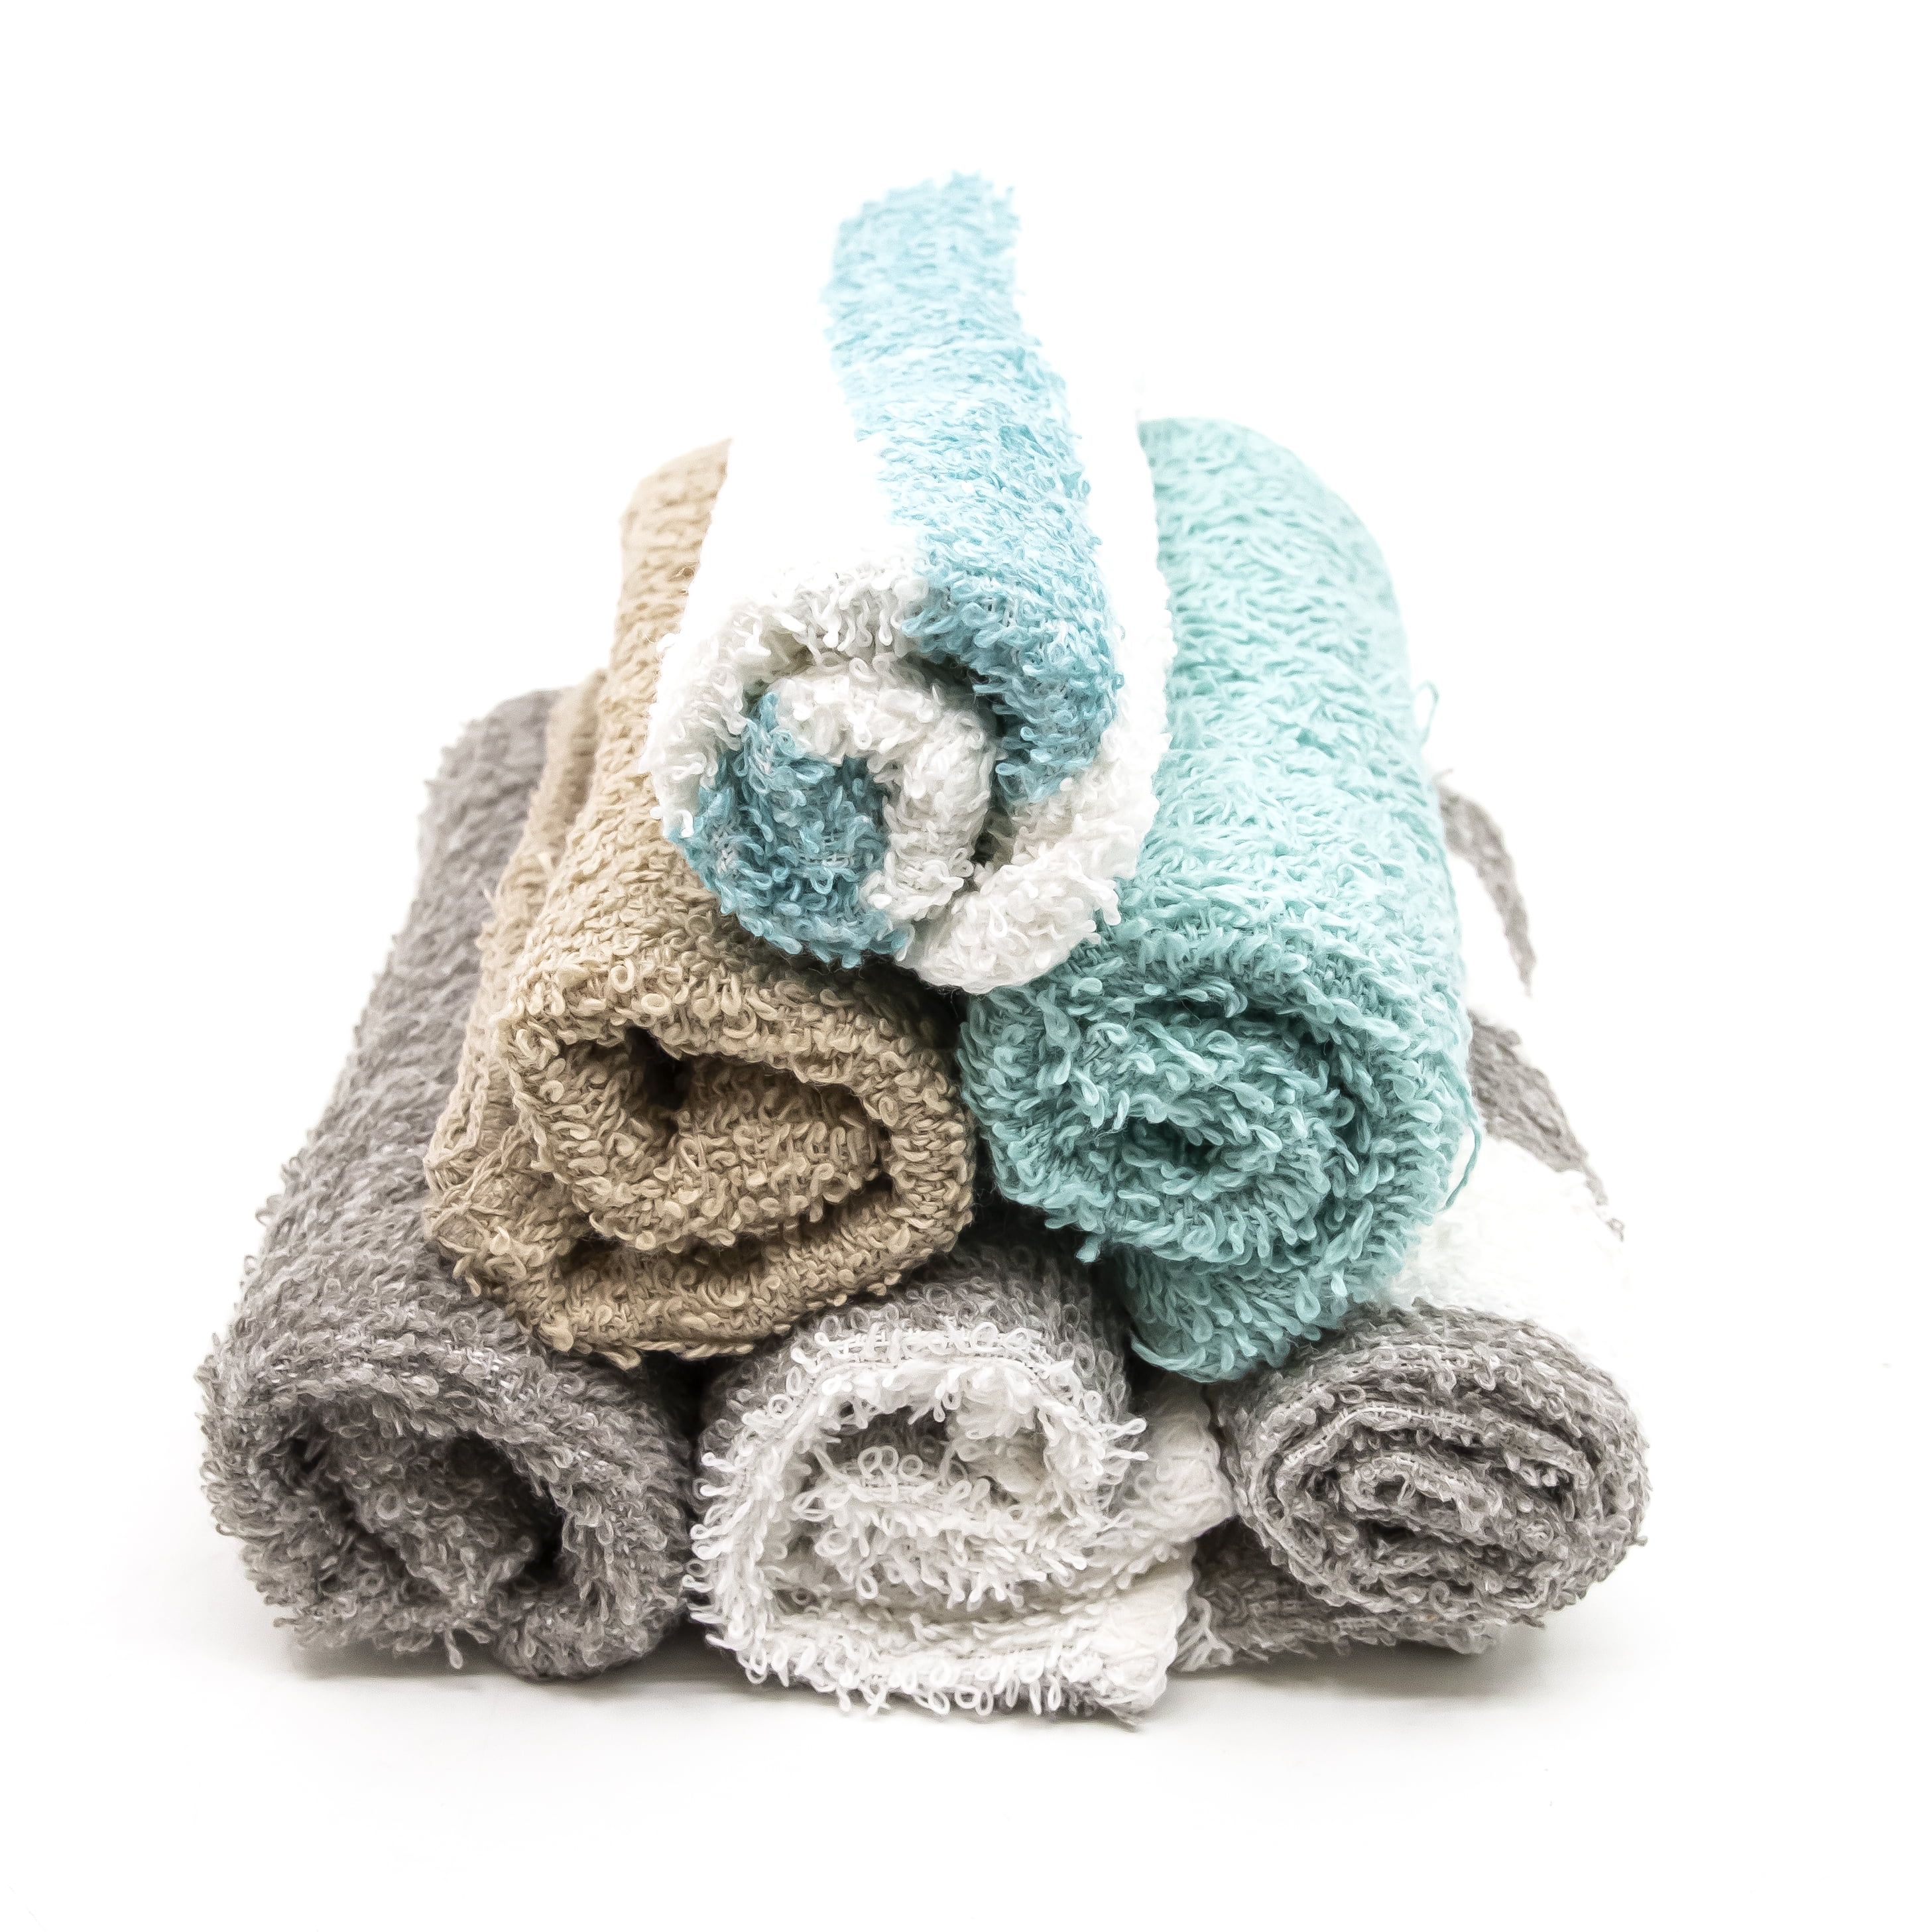 White Wash cloths 11x11 hotel Kitchen washcloth Towel 6 pcs 100% cotton